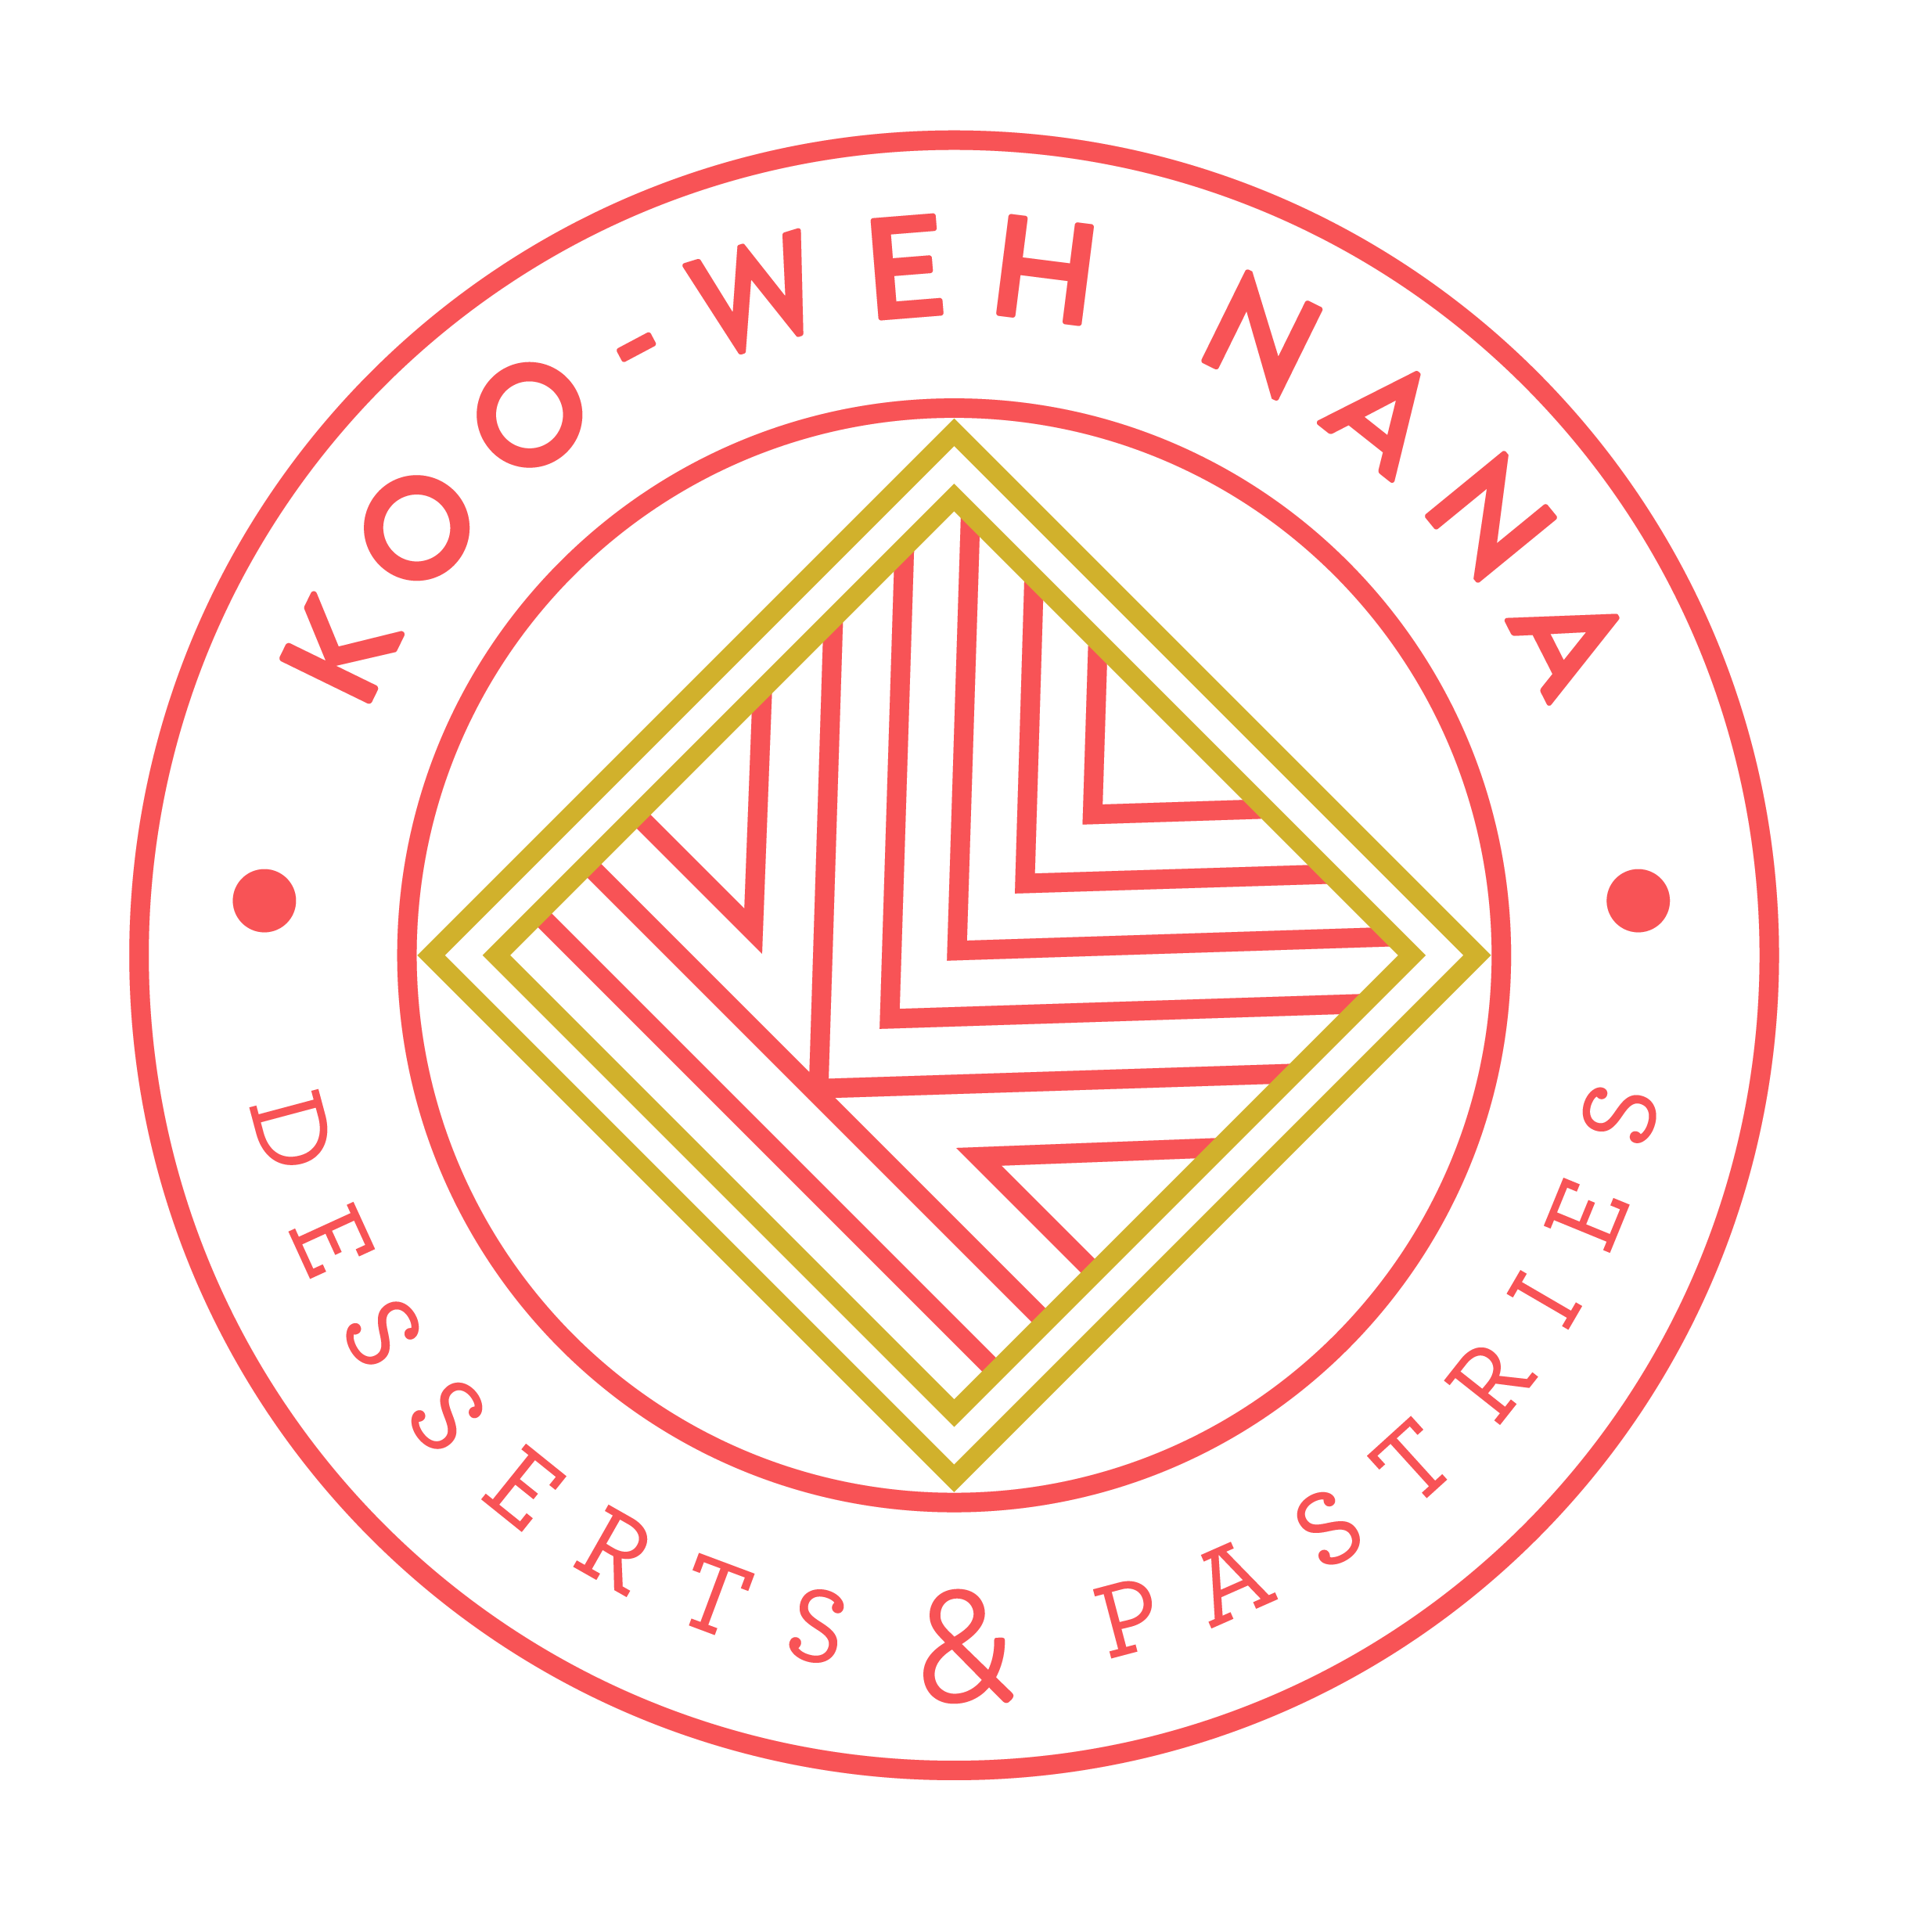 Koo-Weh Nana